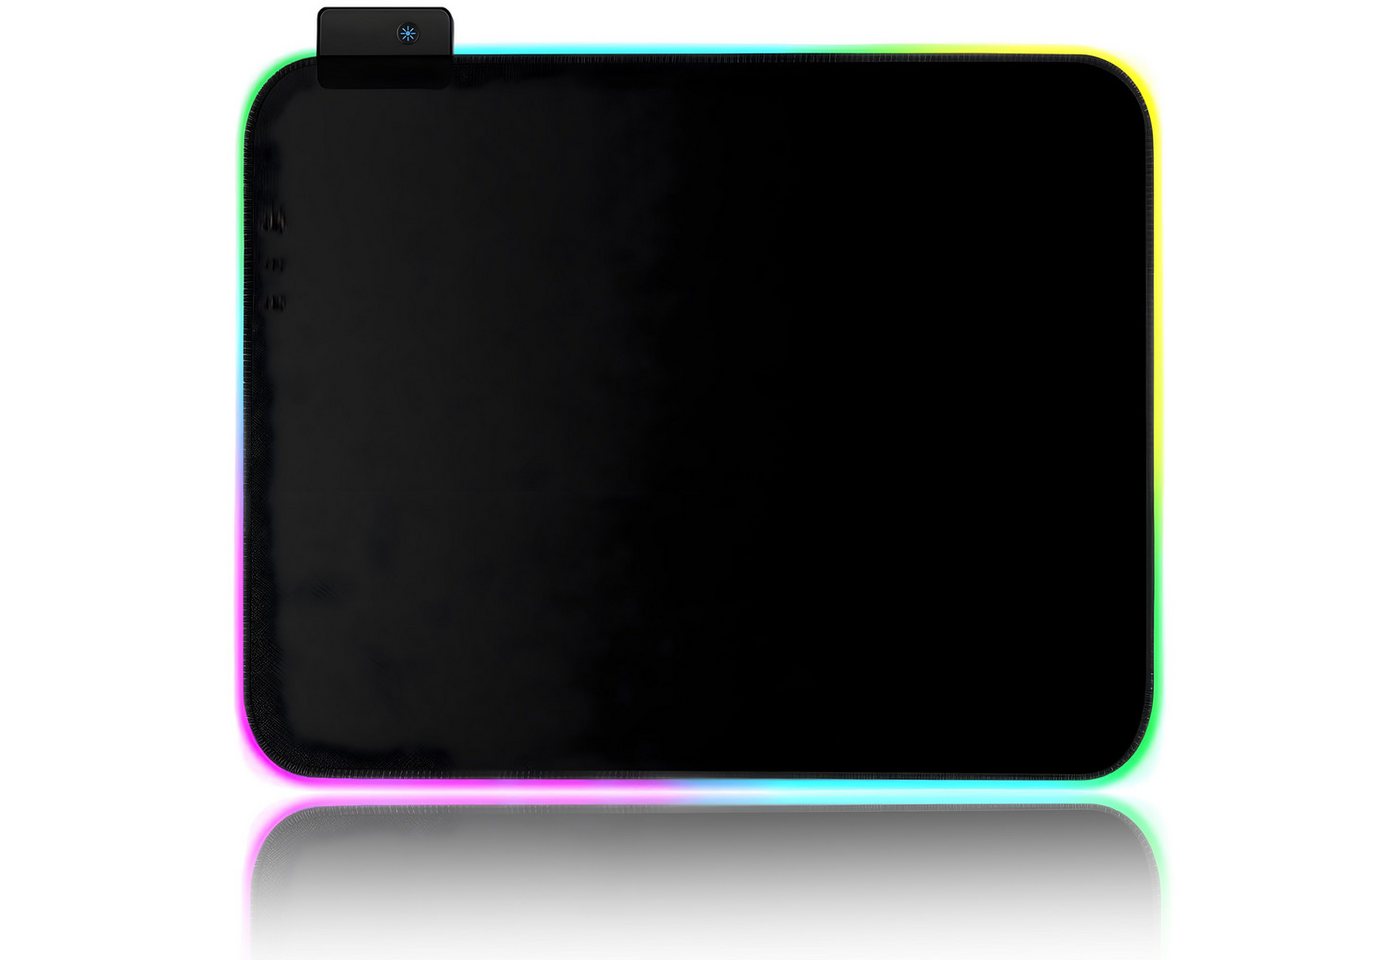 Retoo Gaming Mauspad Mousepad RGB Gaming Pad Anti-Rutsch 250 x 350 mm Maus Beleuchtung LED (Set, Gaming-Mauspad, USB-Kabel), LED-Hintergrundbeleuchtung, Portabilität, Hochwertige Materialien von Retoo